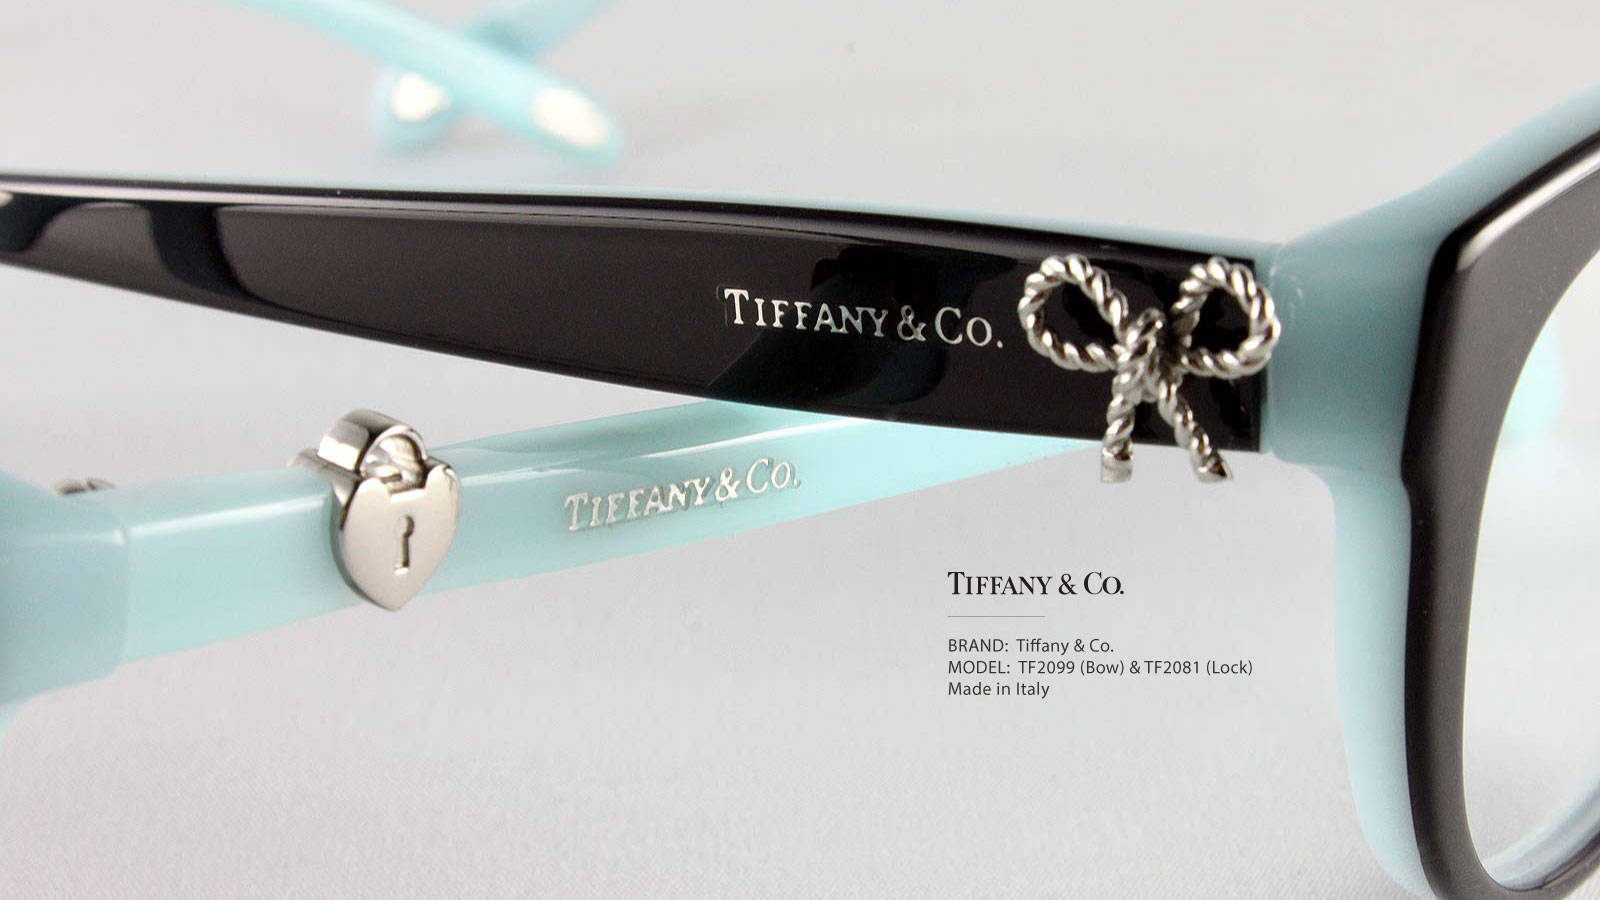 Tiffany & Co. Lock And Bow Wallpaper